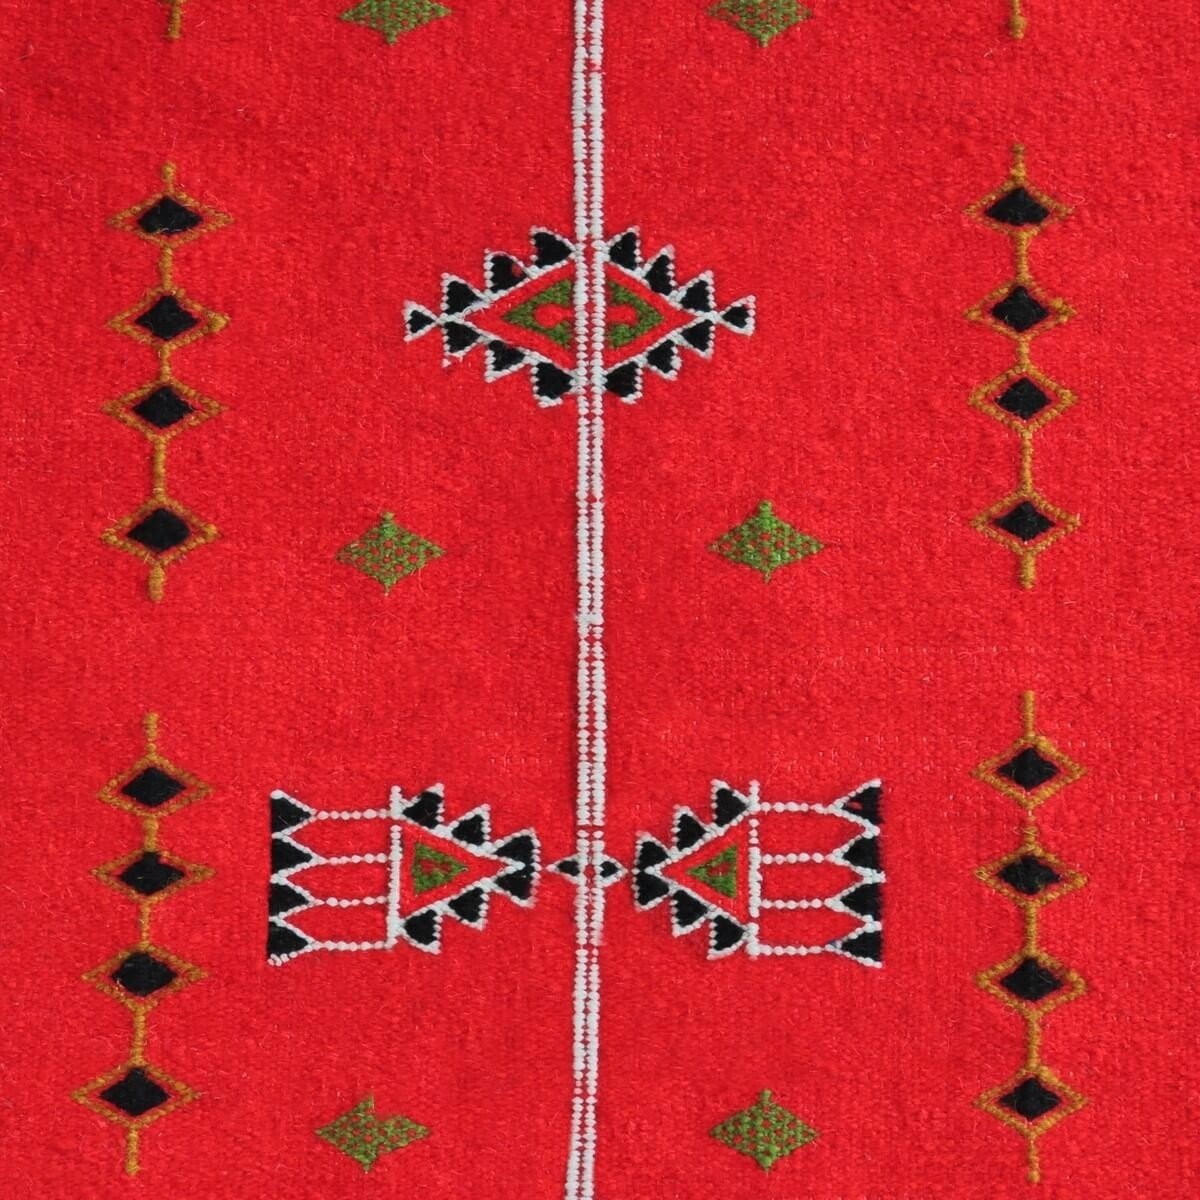 Berber tapijt Tapijt Kilim lang Bou Arada 65x220 Rood (Handgeweven, Wol, Tunesië) Tunesisch kilimdeken, Marokkaanse stijl. Recht